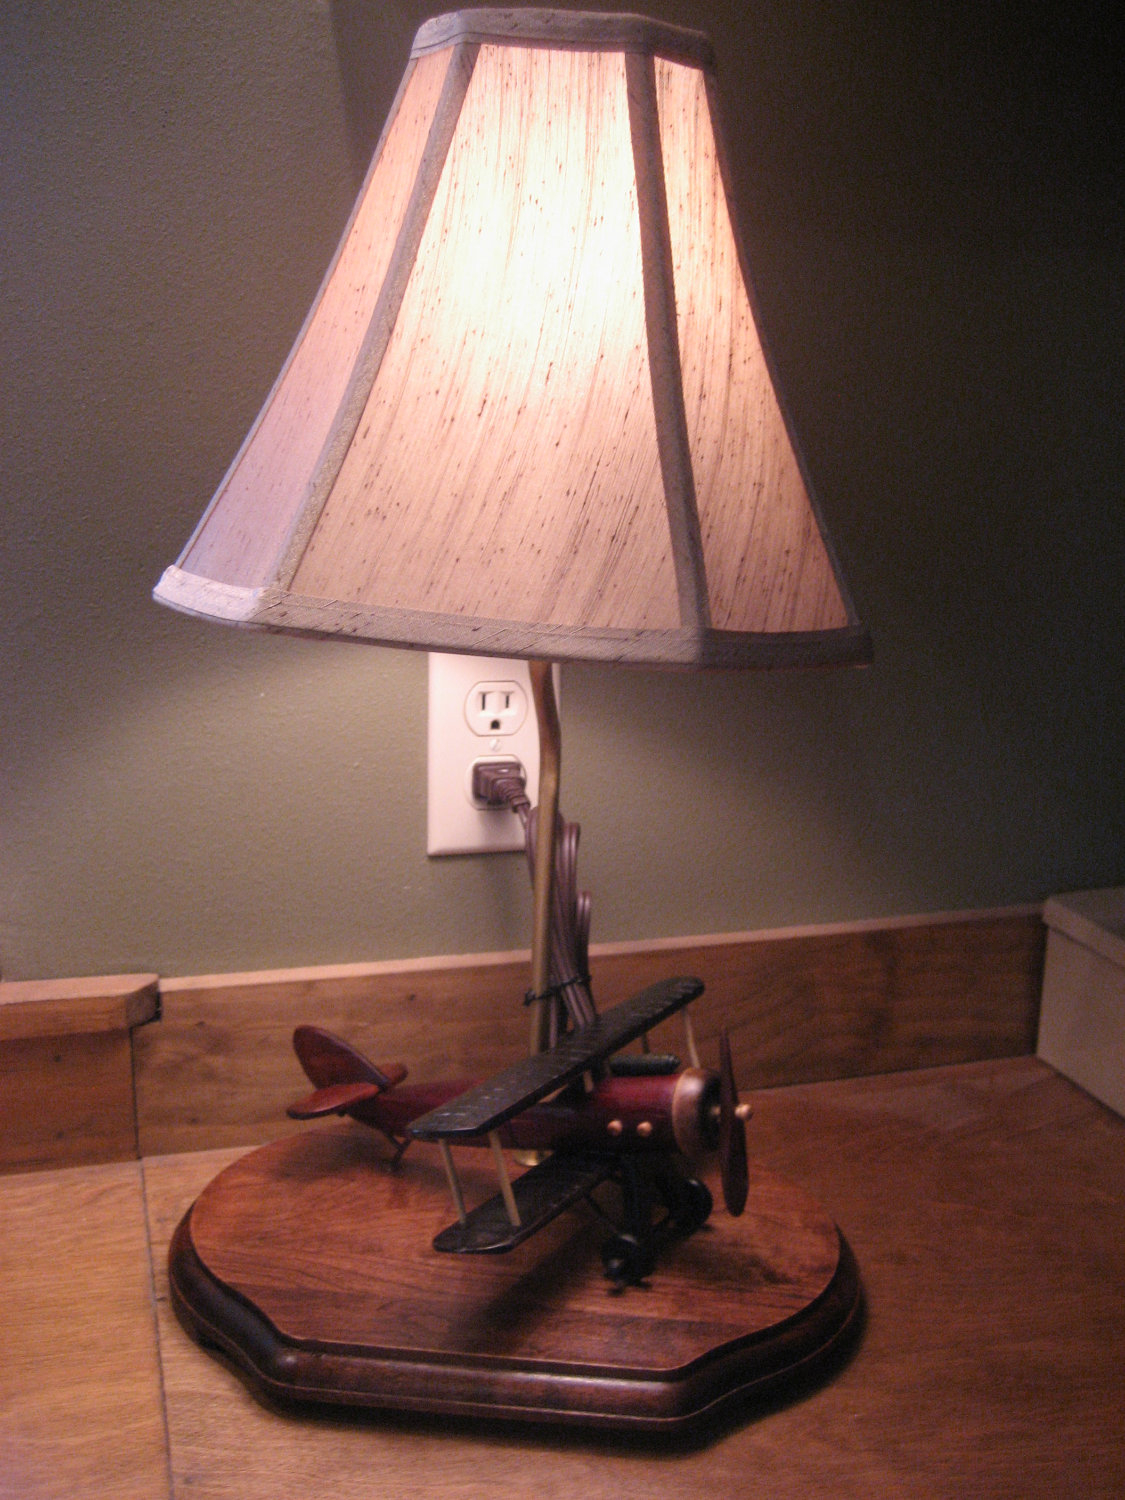 Handmade vintage style airplane lamp